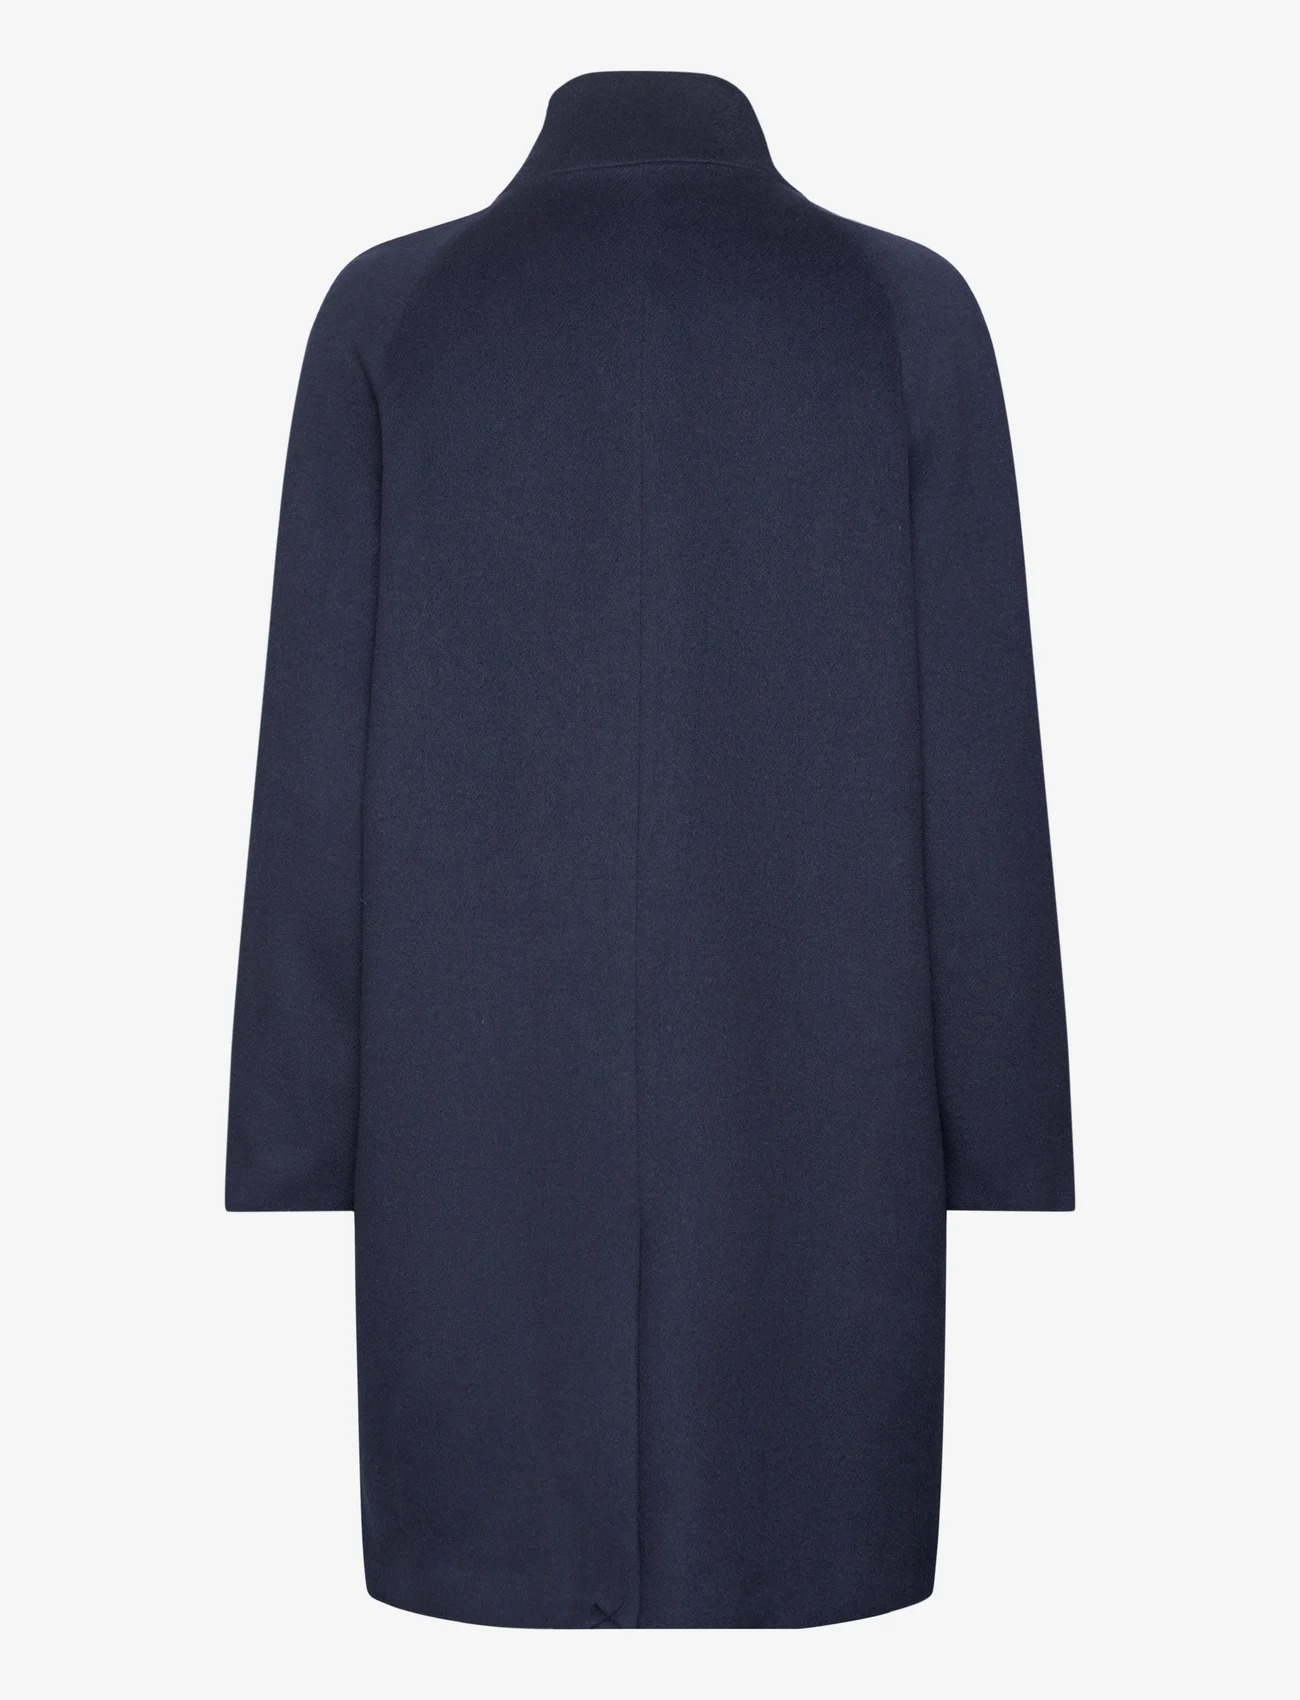 Noa Noa - CeciliaNN Coat - light coats - navy blazer - 1